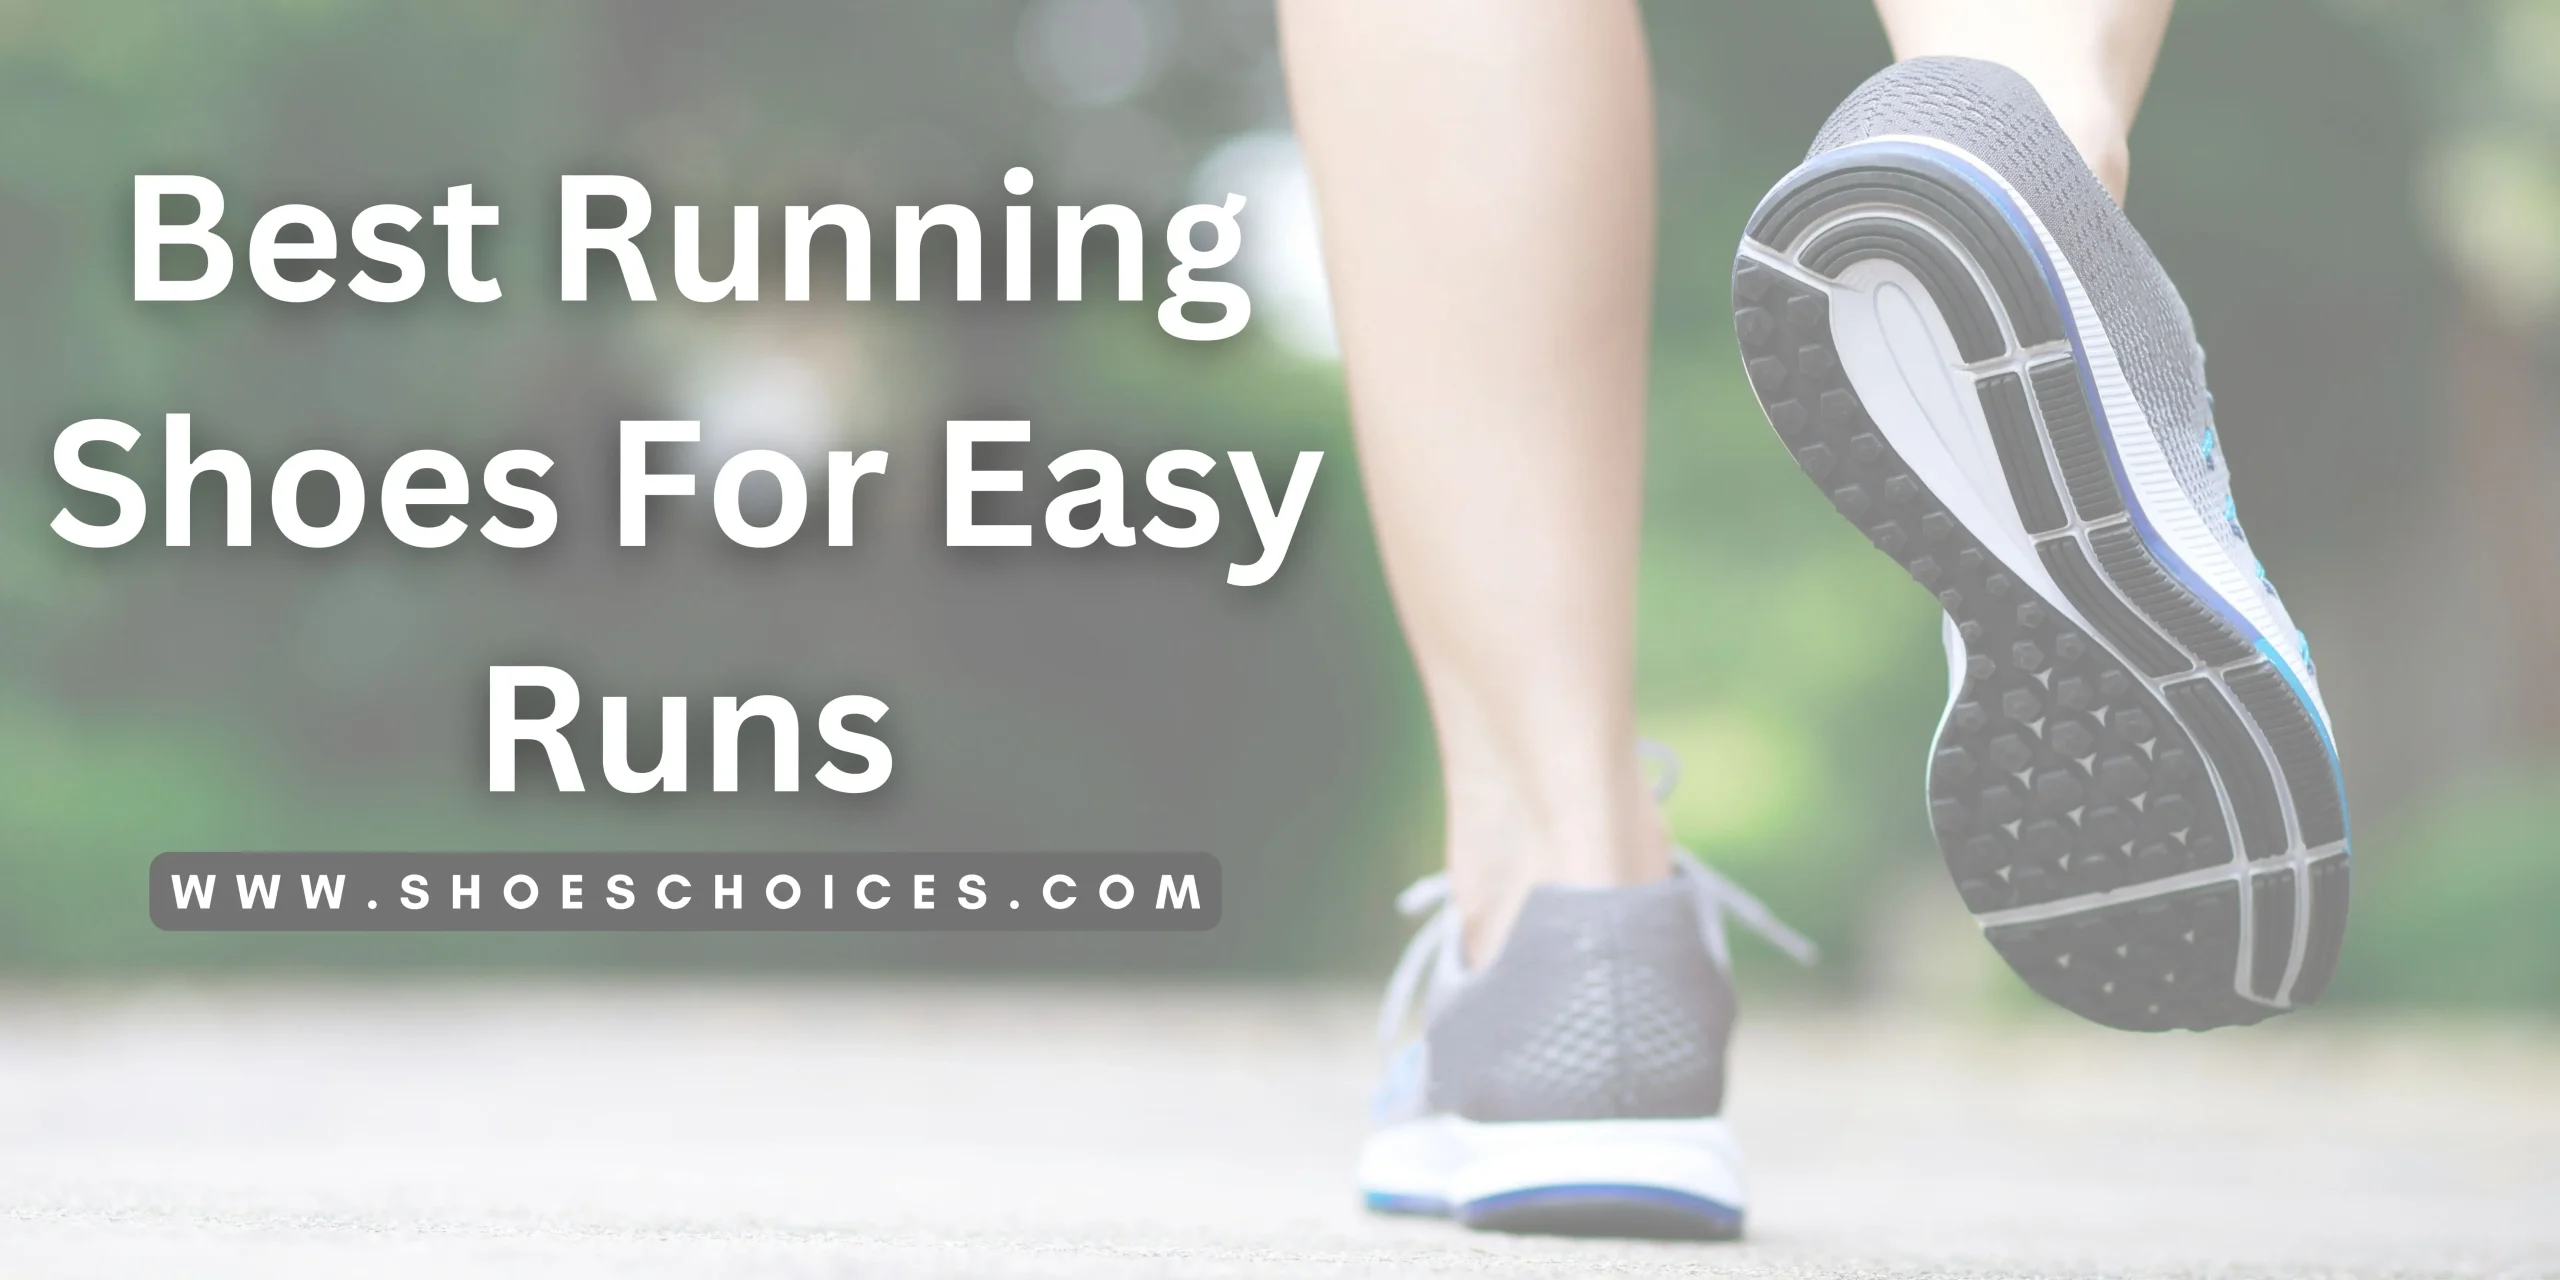 Best Running Shoes For Easy Runs